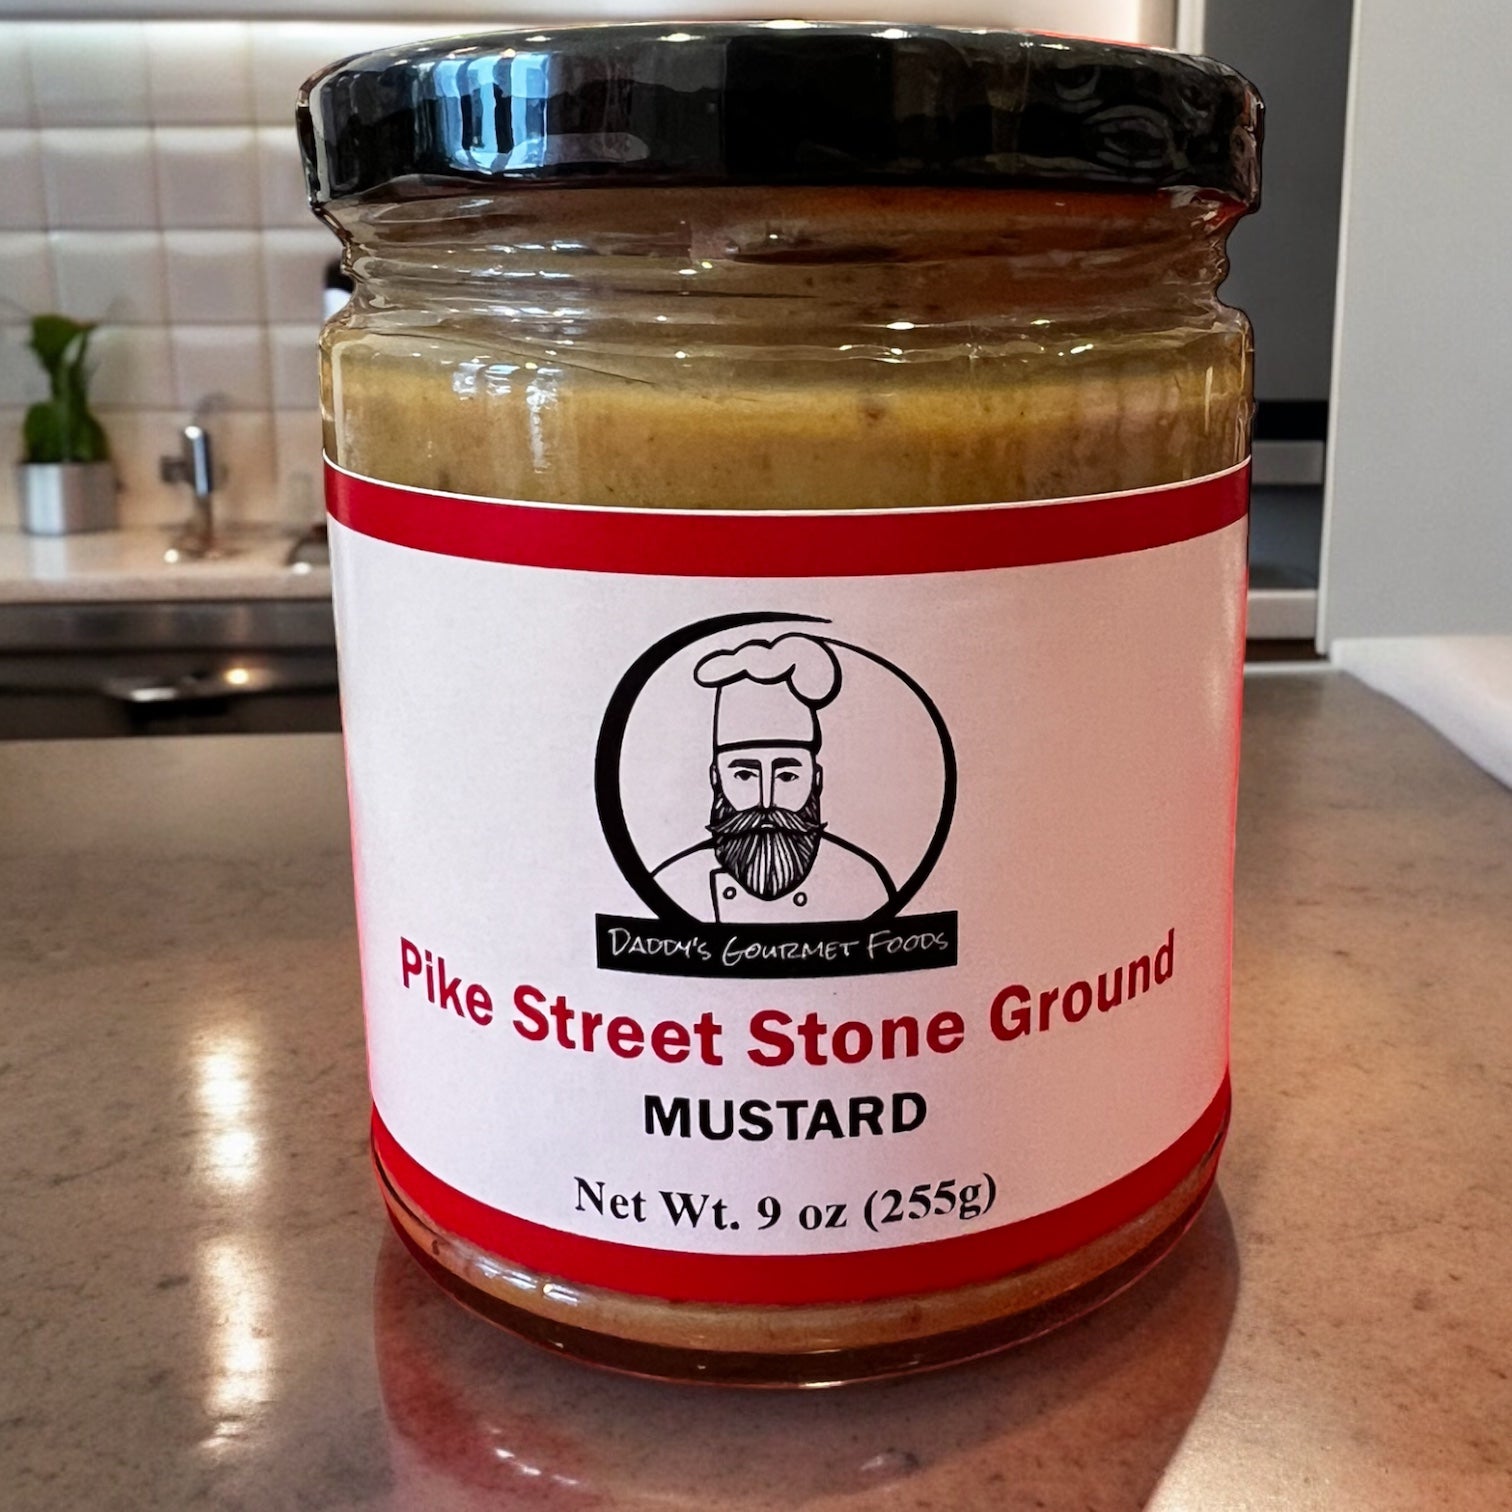 Pike Street Stone Ground Mustard 9 oz (255g) Daddy's Gourmet Foods